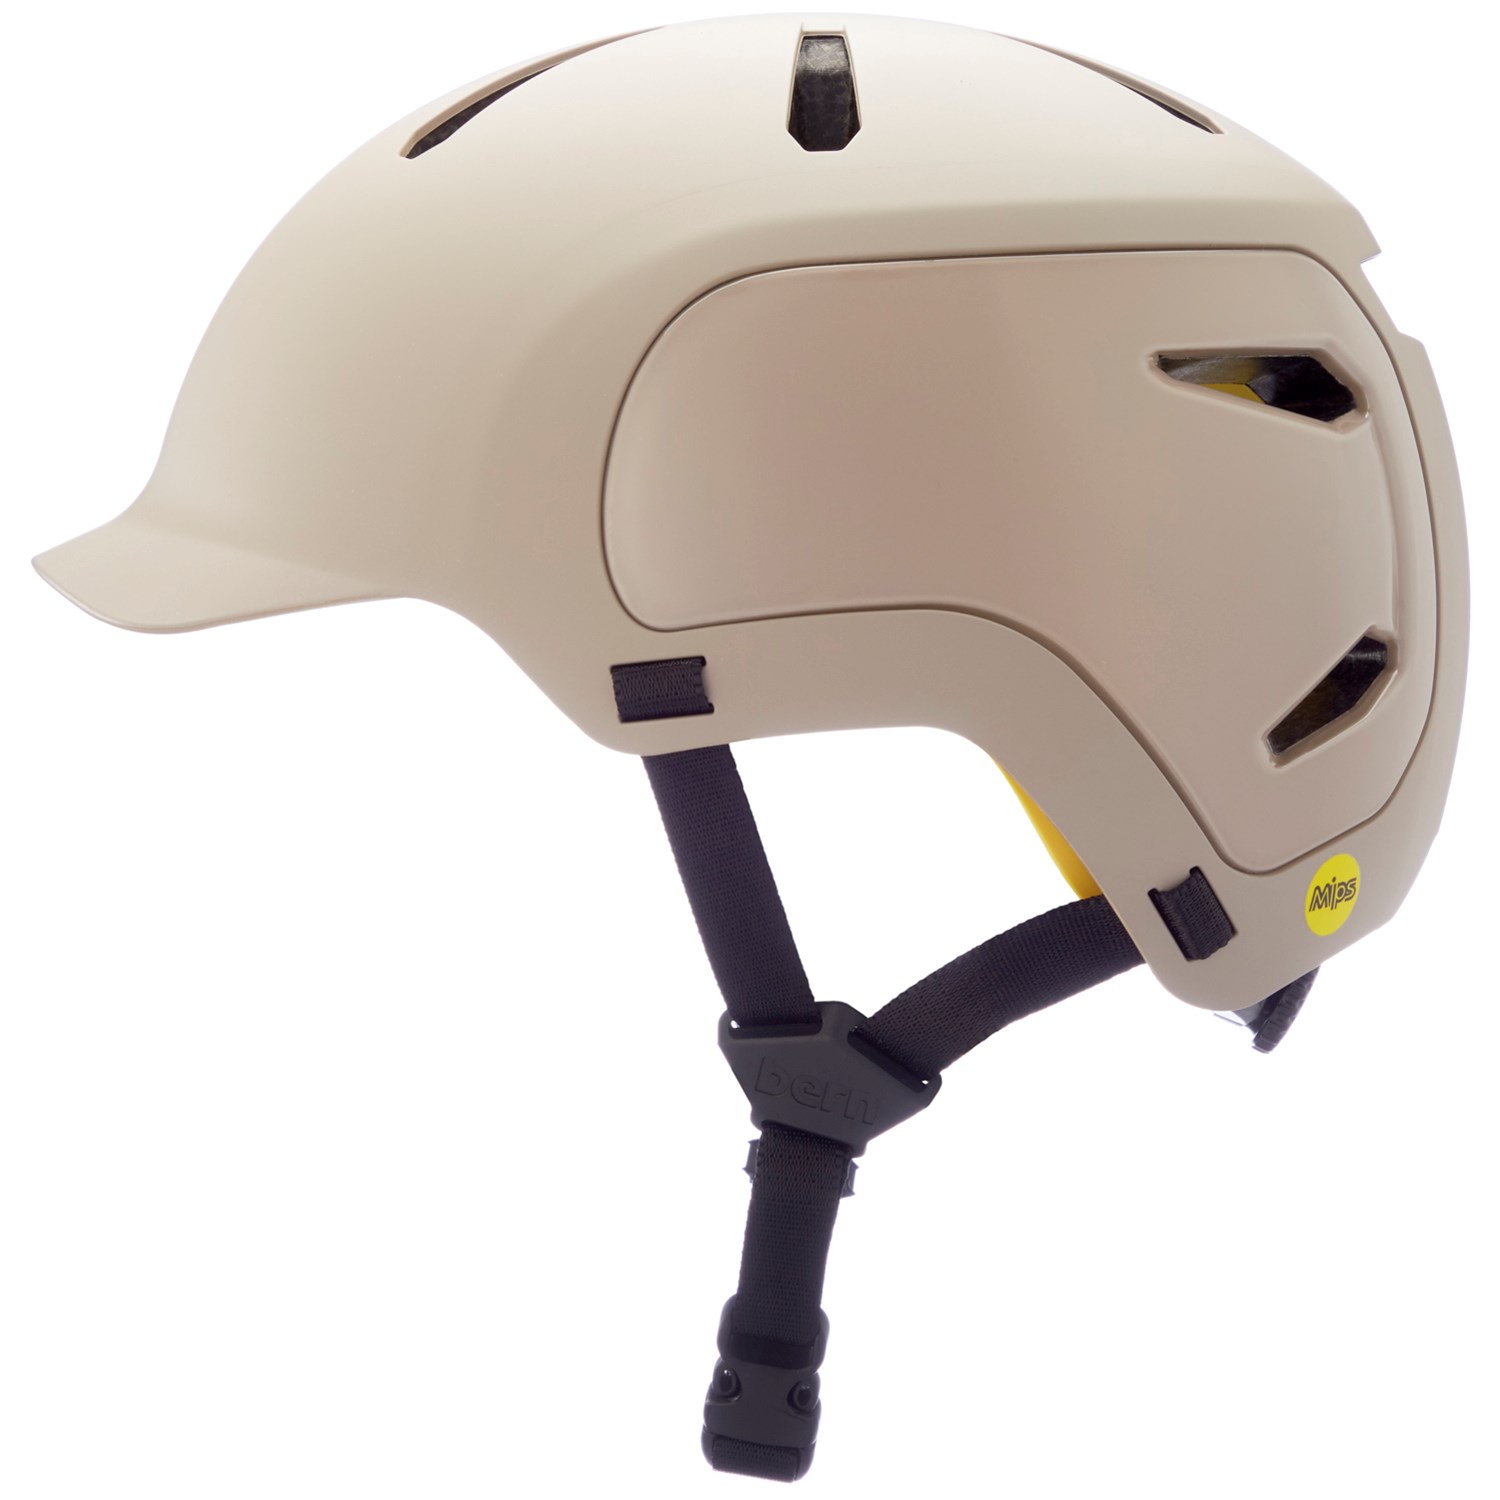 watts 2.0 bike helmet